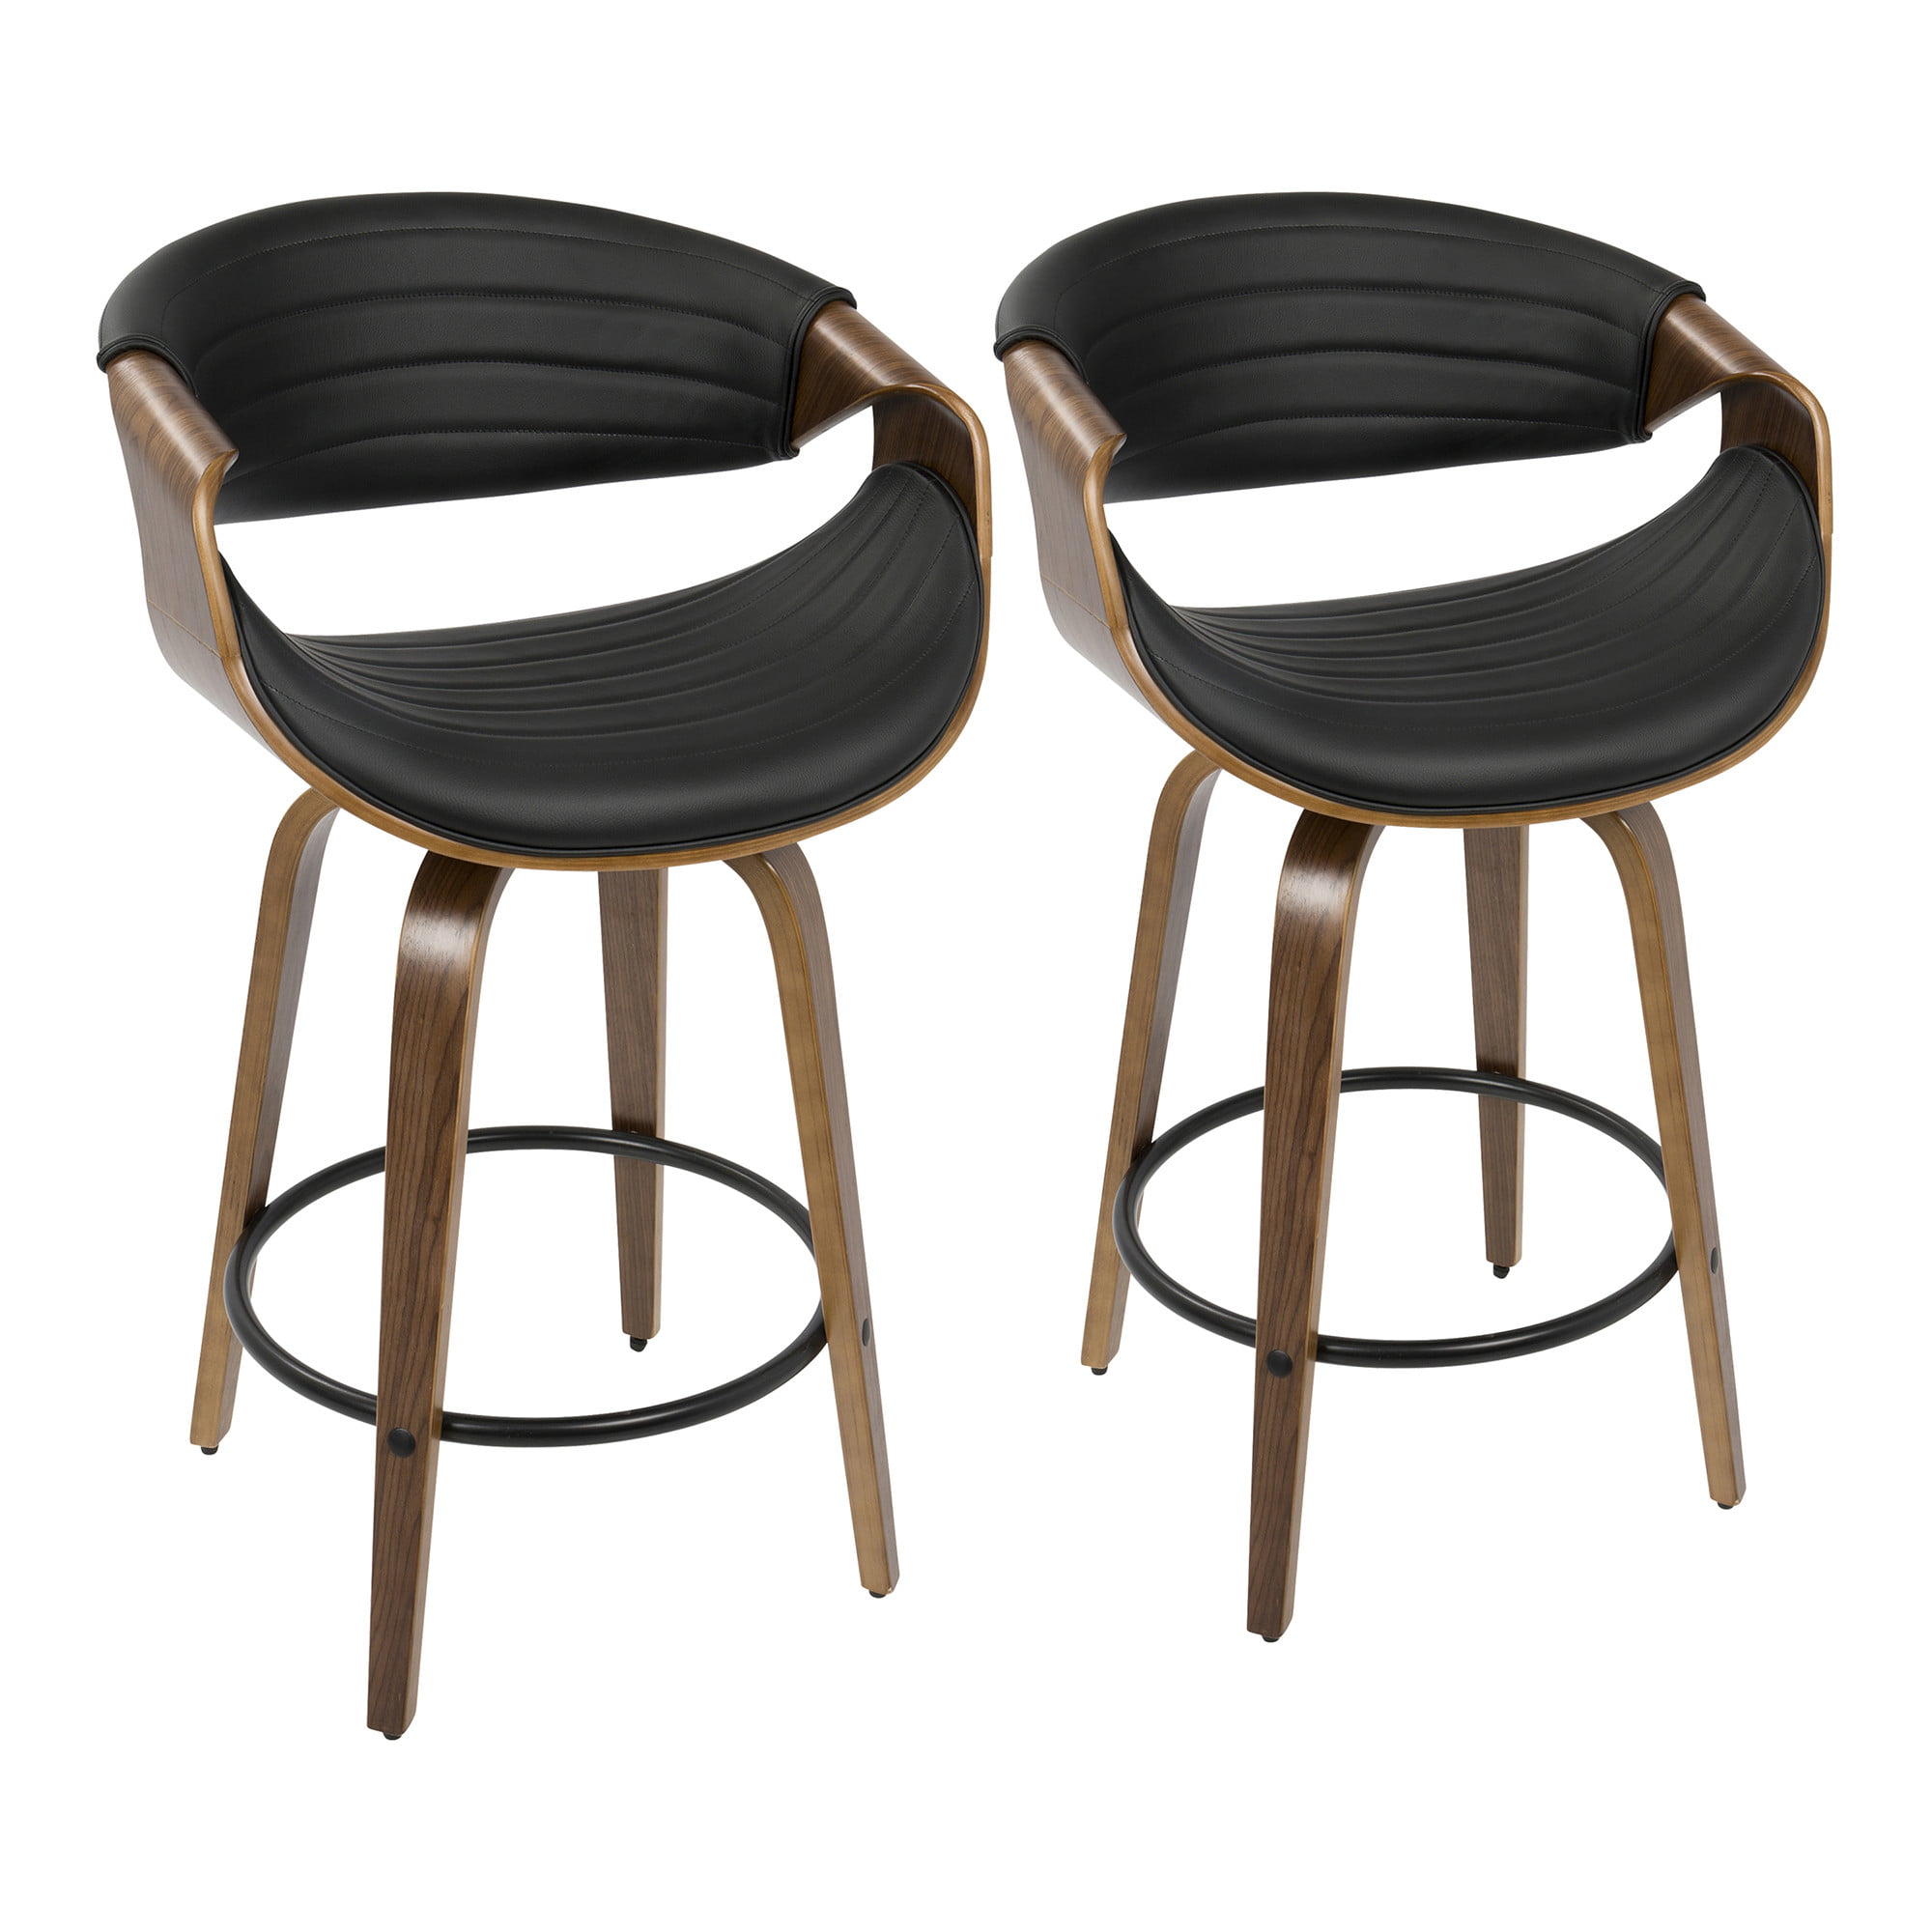 Contemporary stools